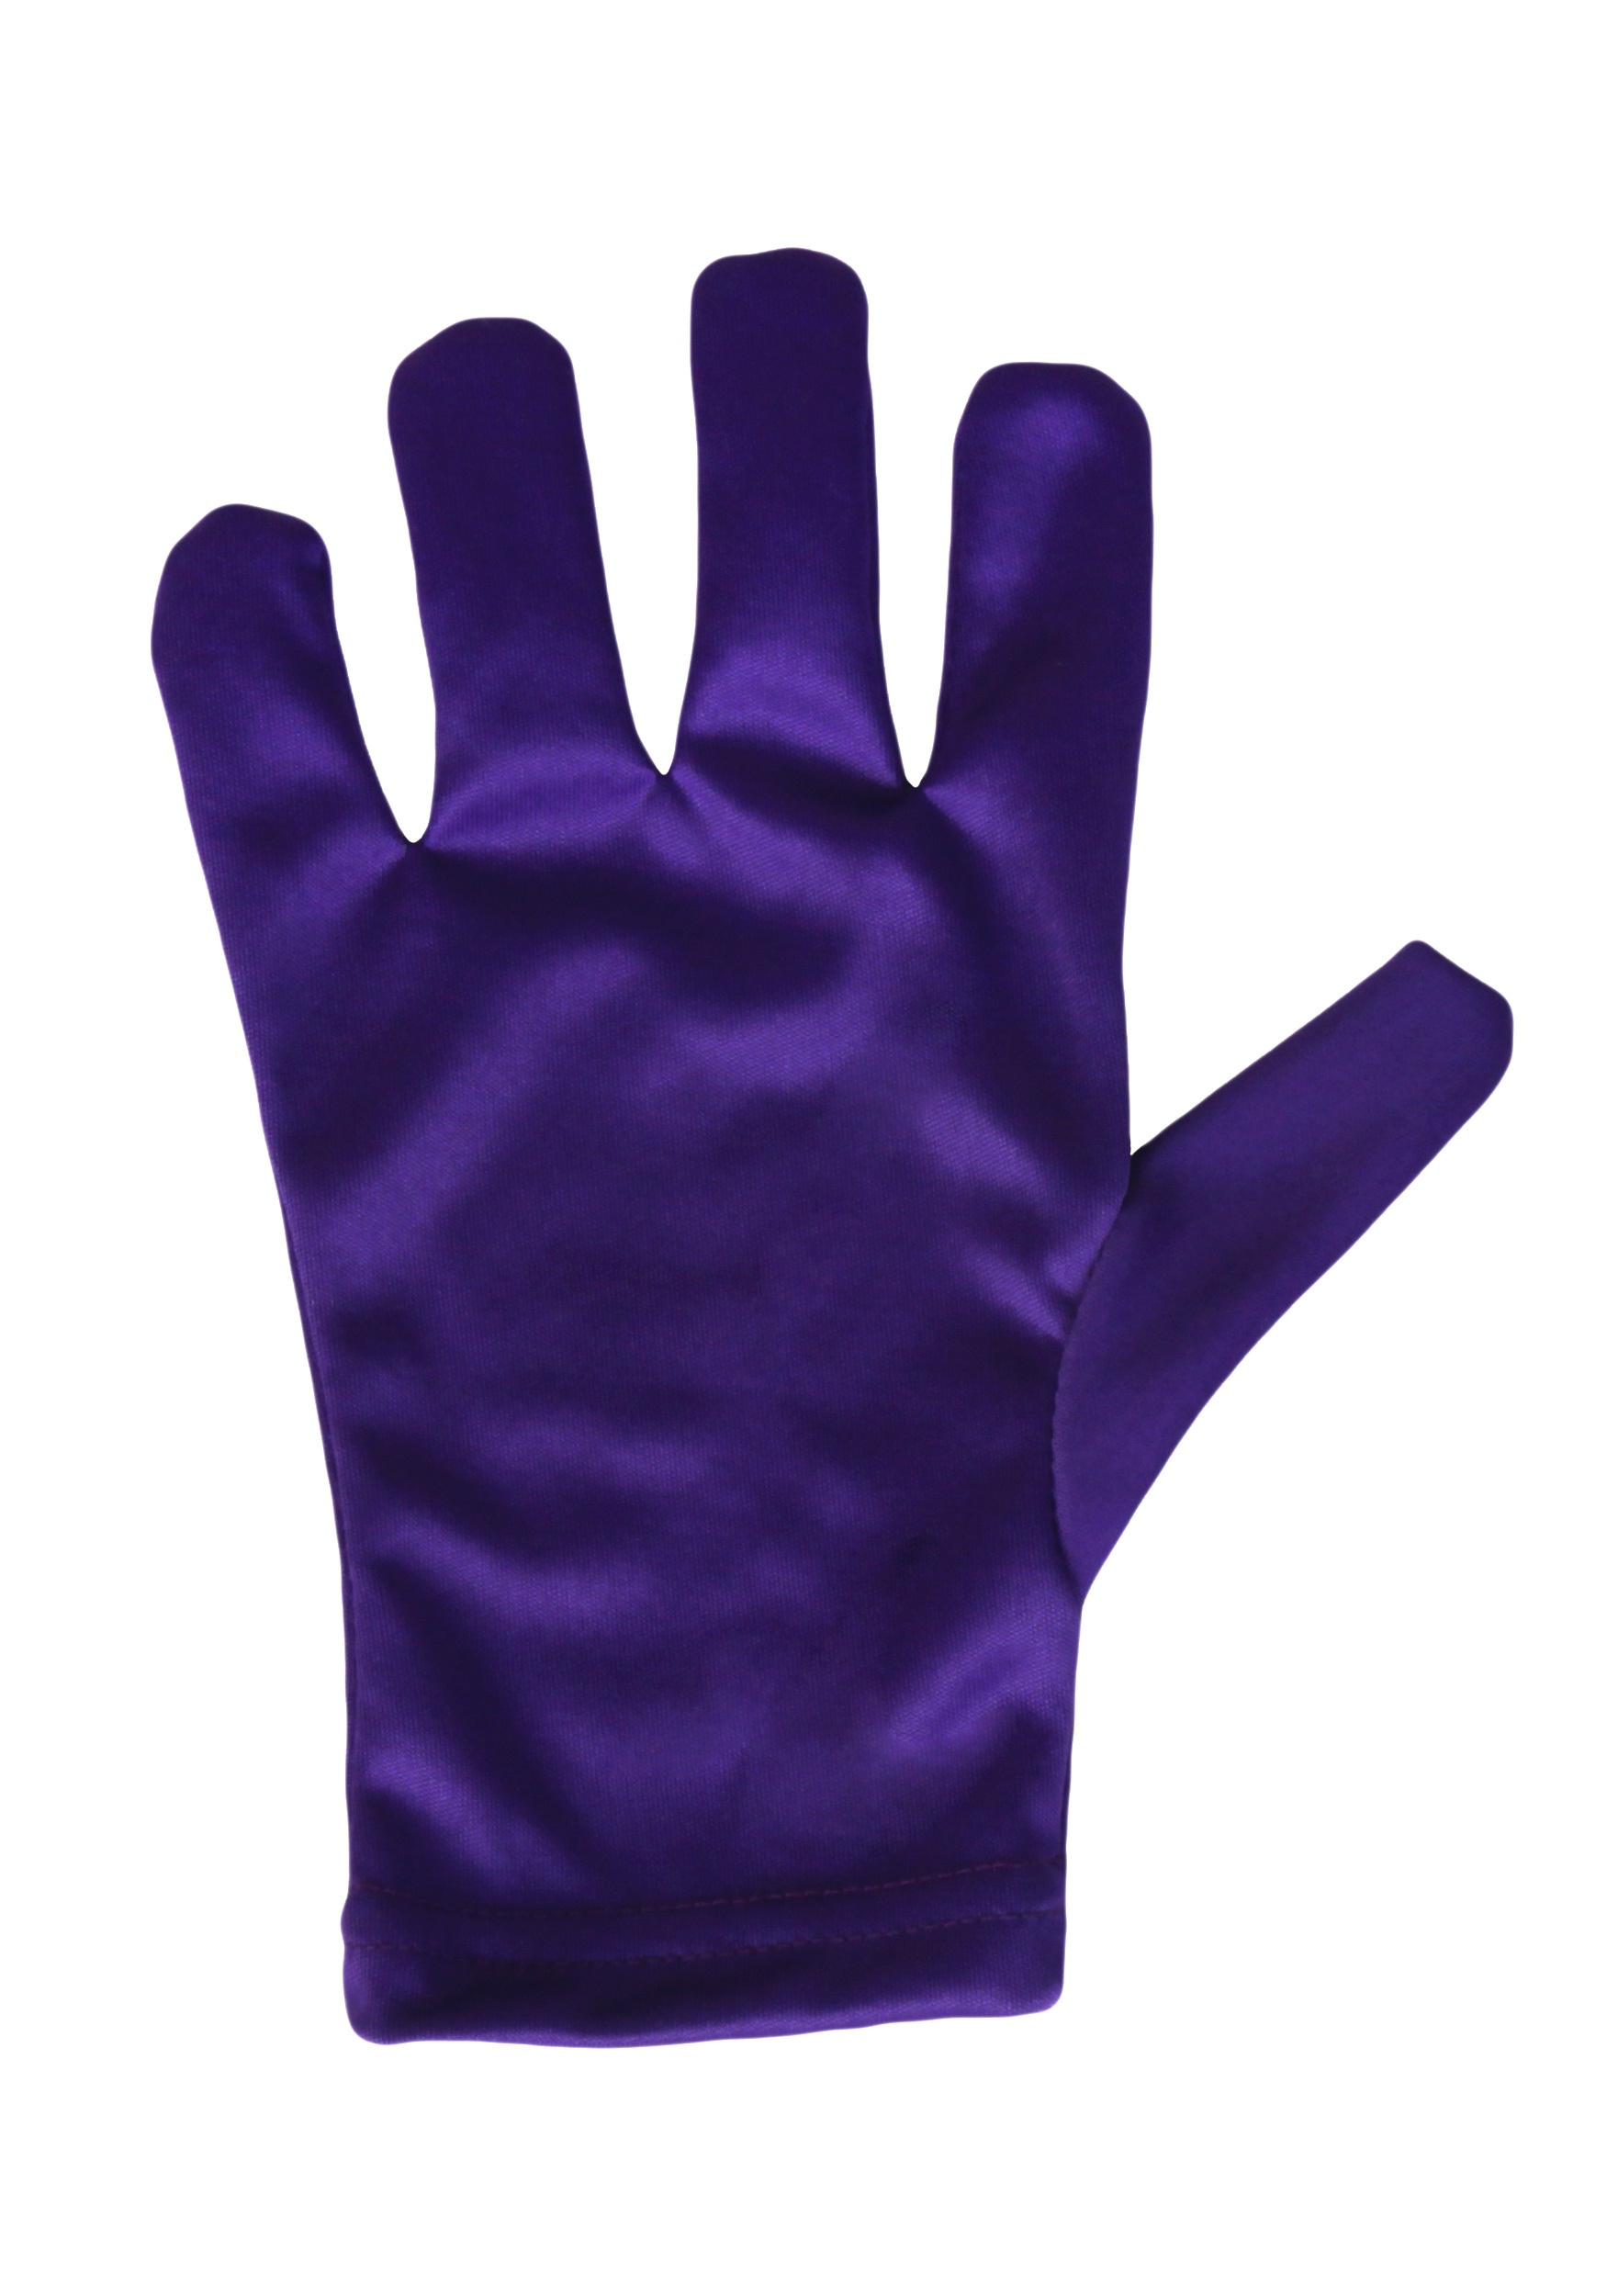 TRIXY XCHANGE Super Hero Costume Womens Purple Gloves Spandex Halloween Costume Purple Arm Warmers Purple Arm Covers Purple Latex Sleeves